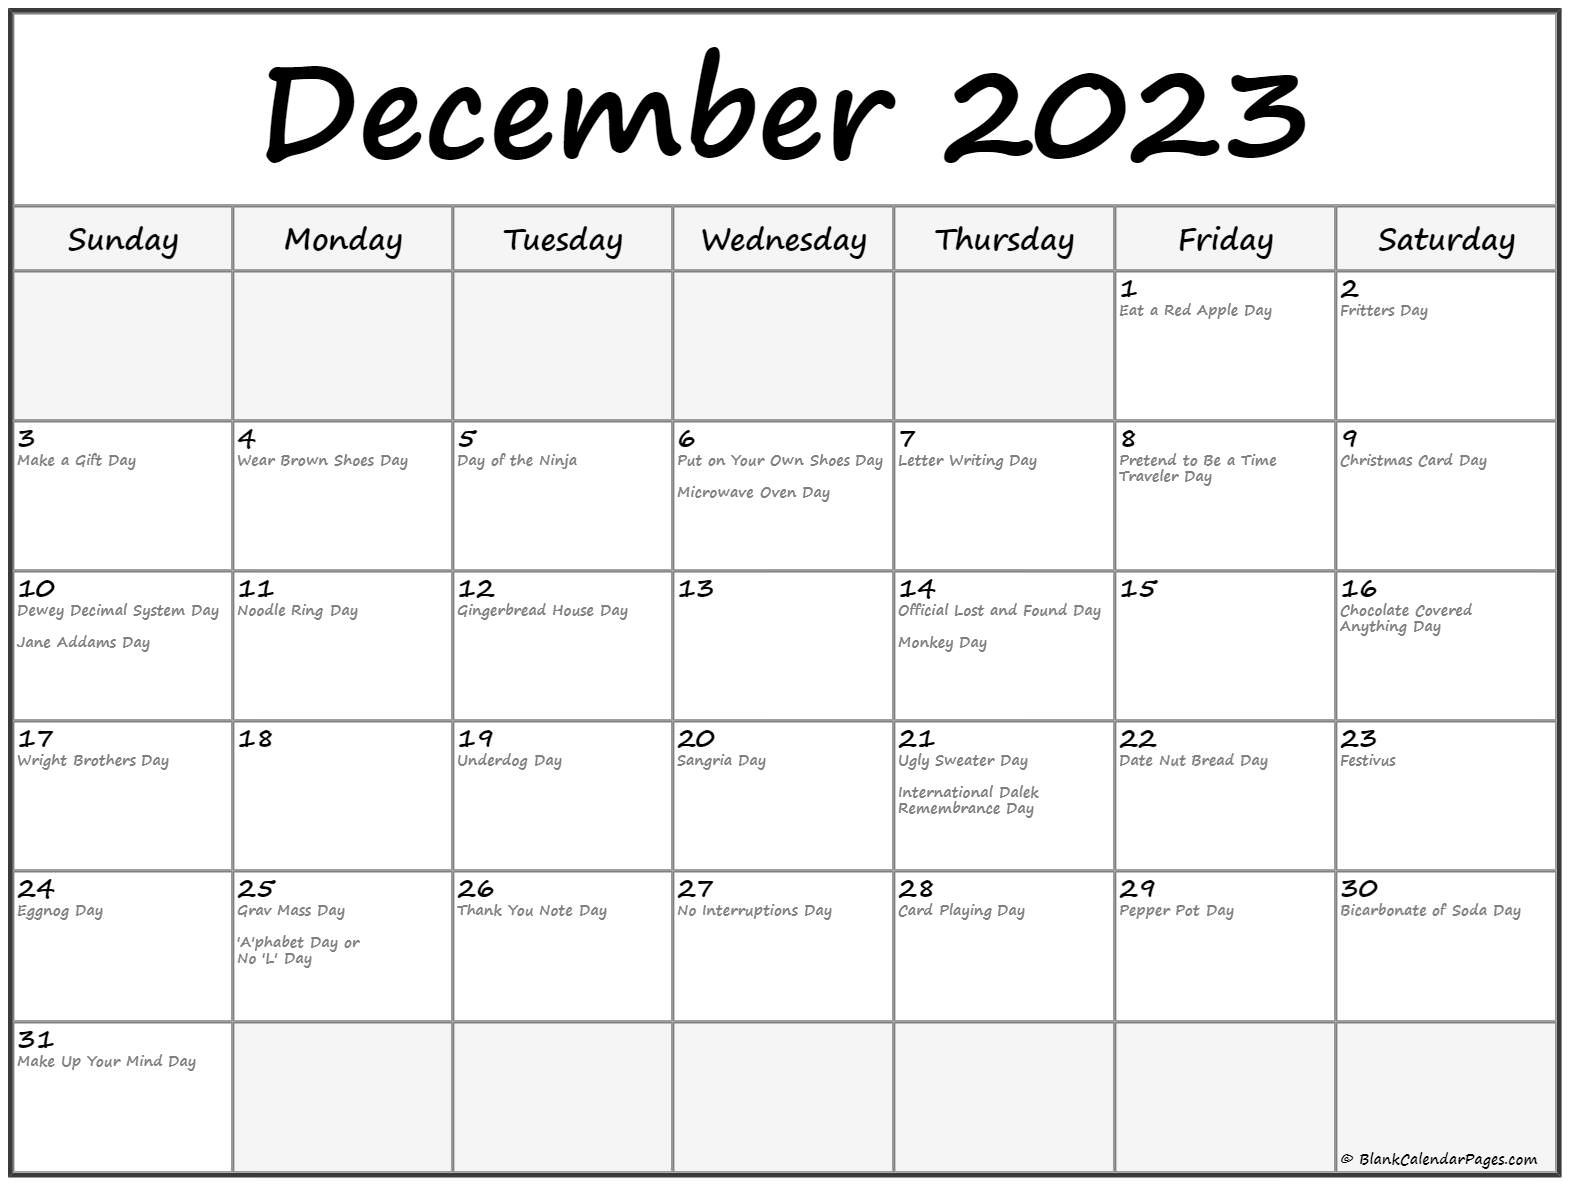 free-december-2023-calendar-cute-pdf-and-image